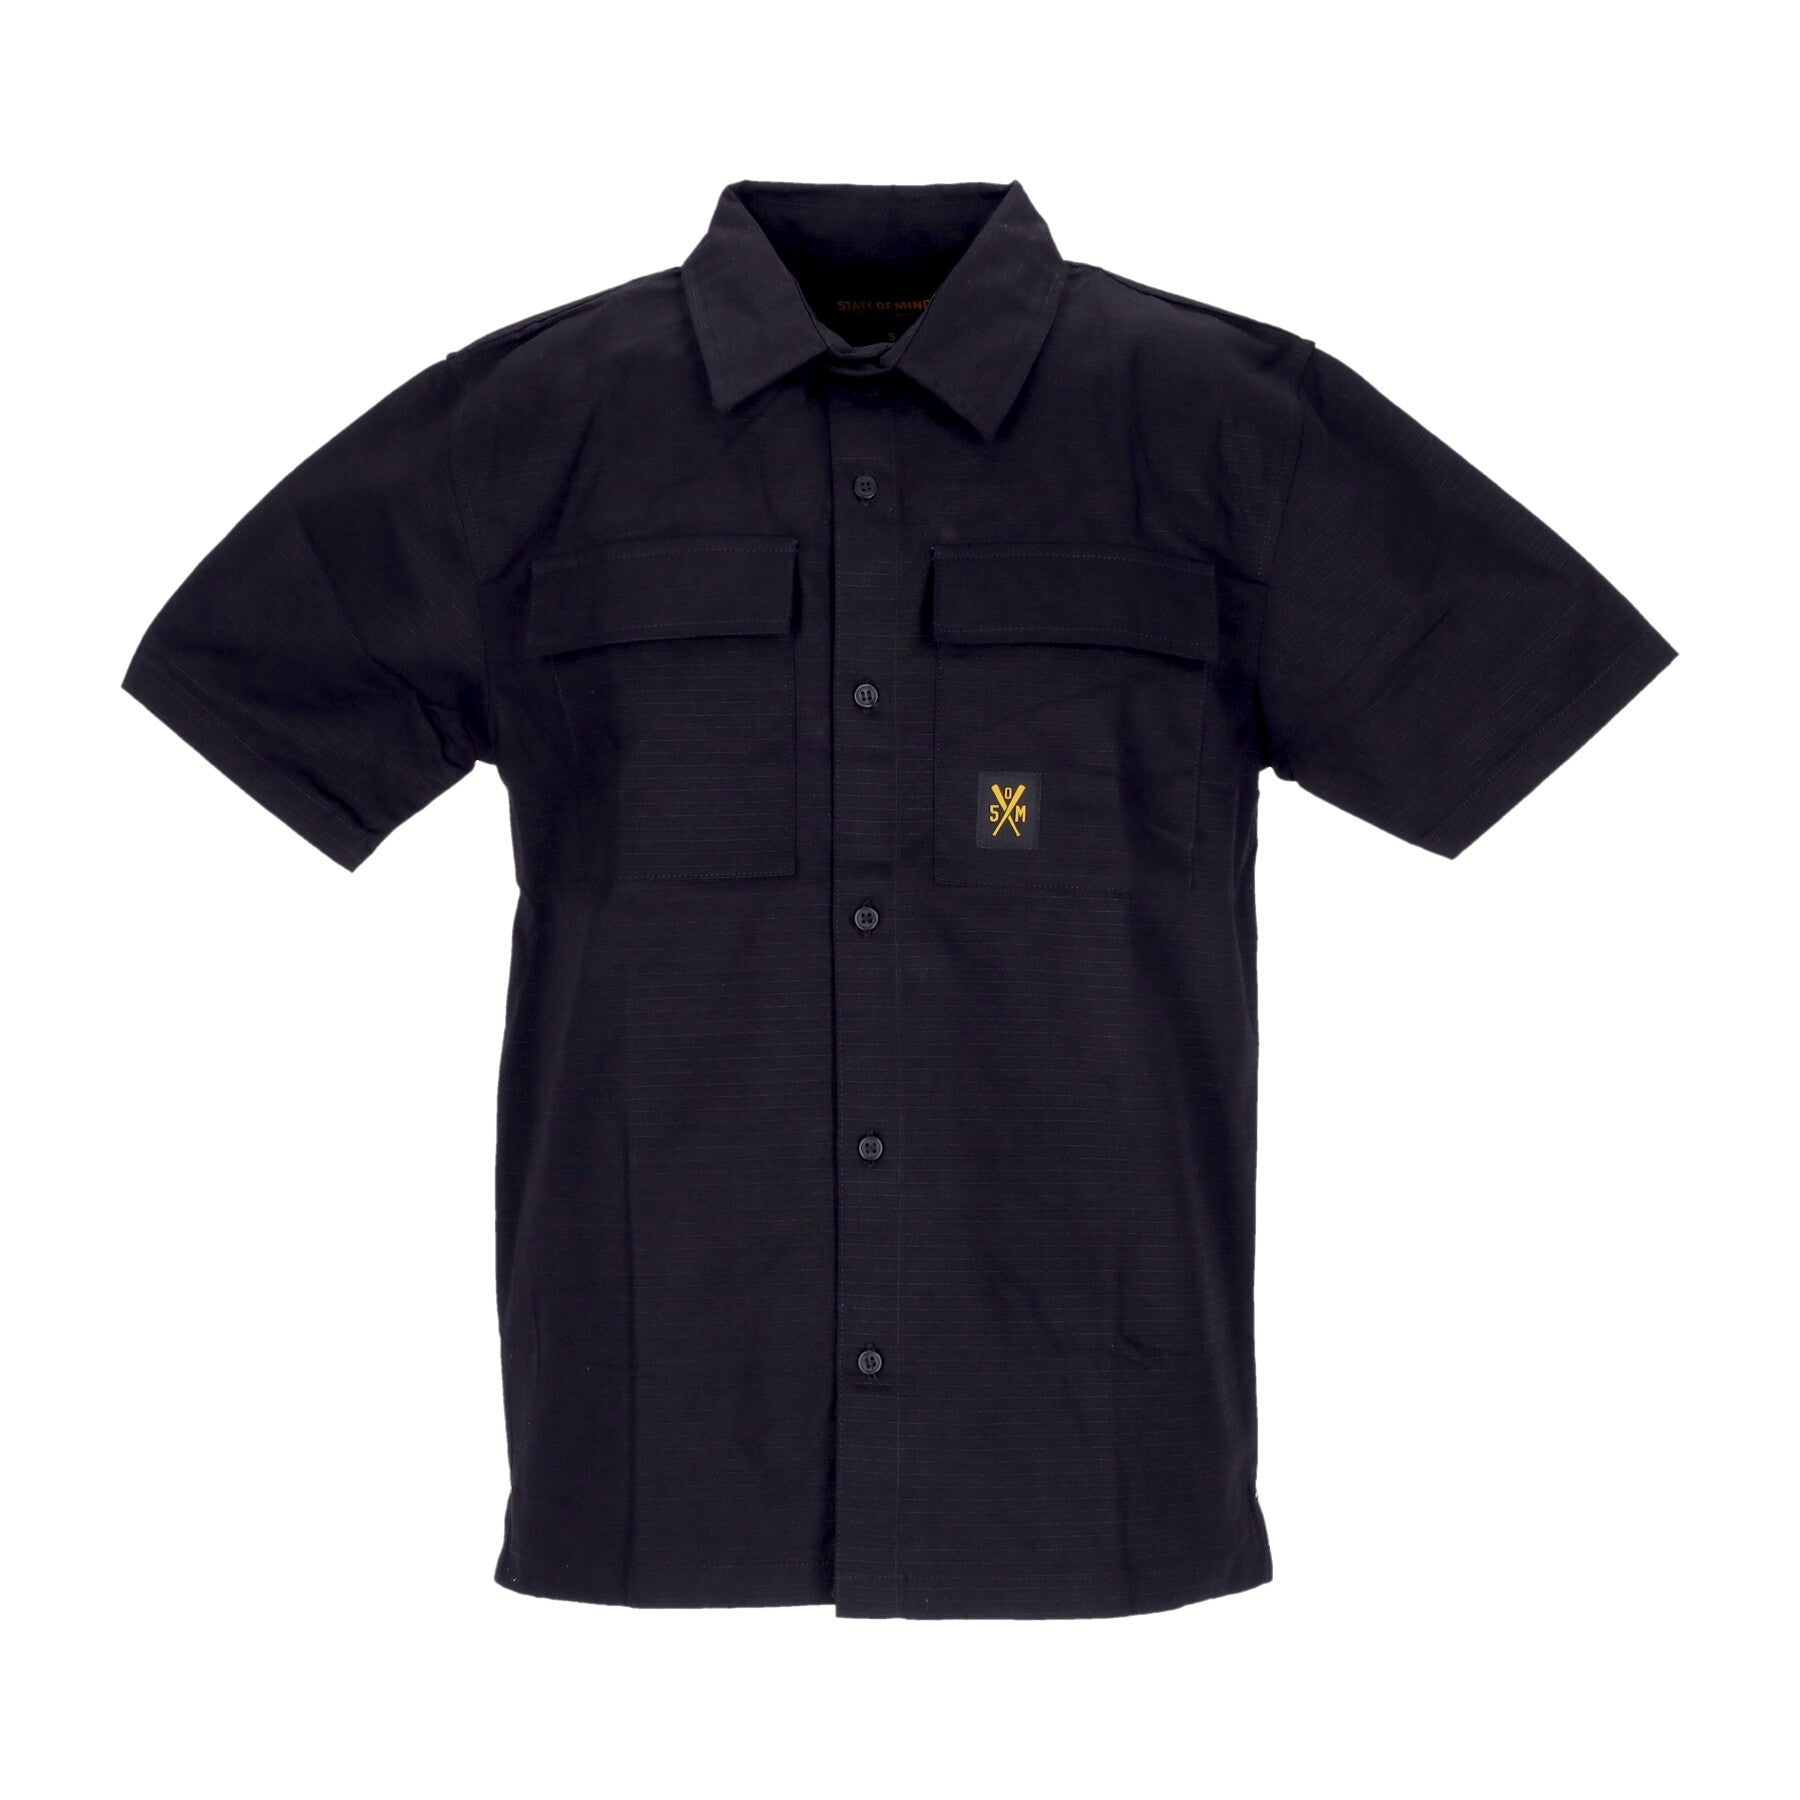 Men's Short Sleeve Shirt Retrofuture Shirt Black